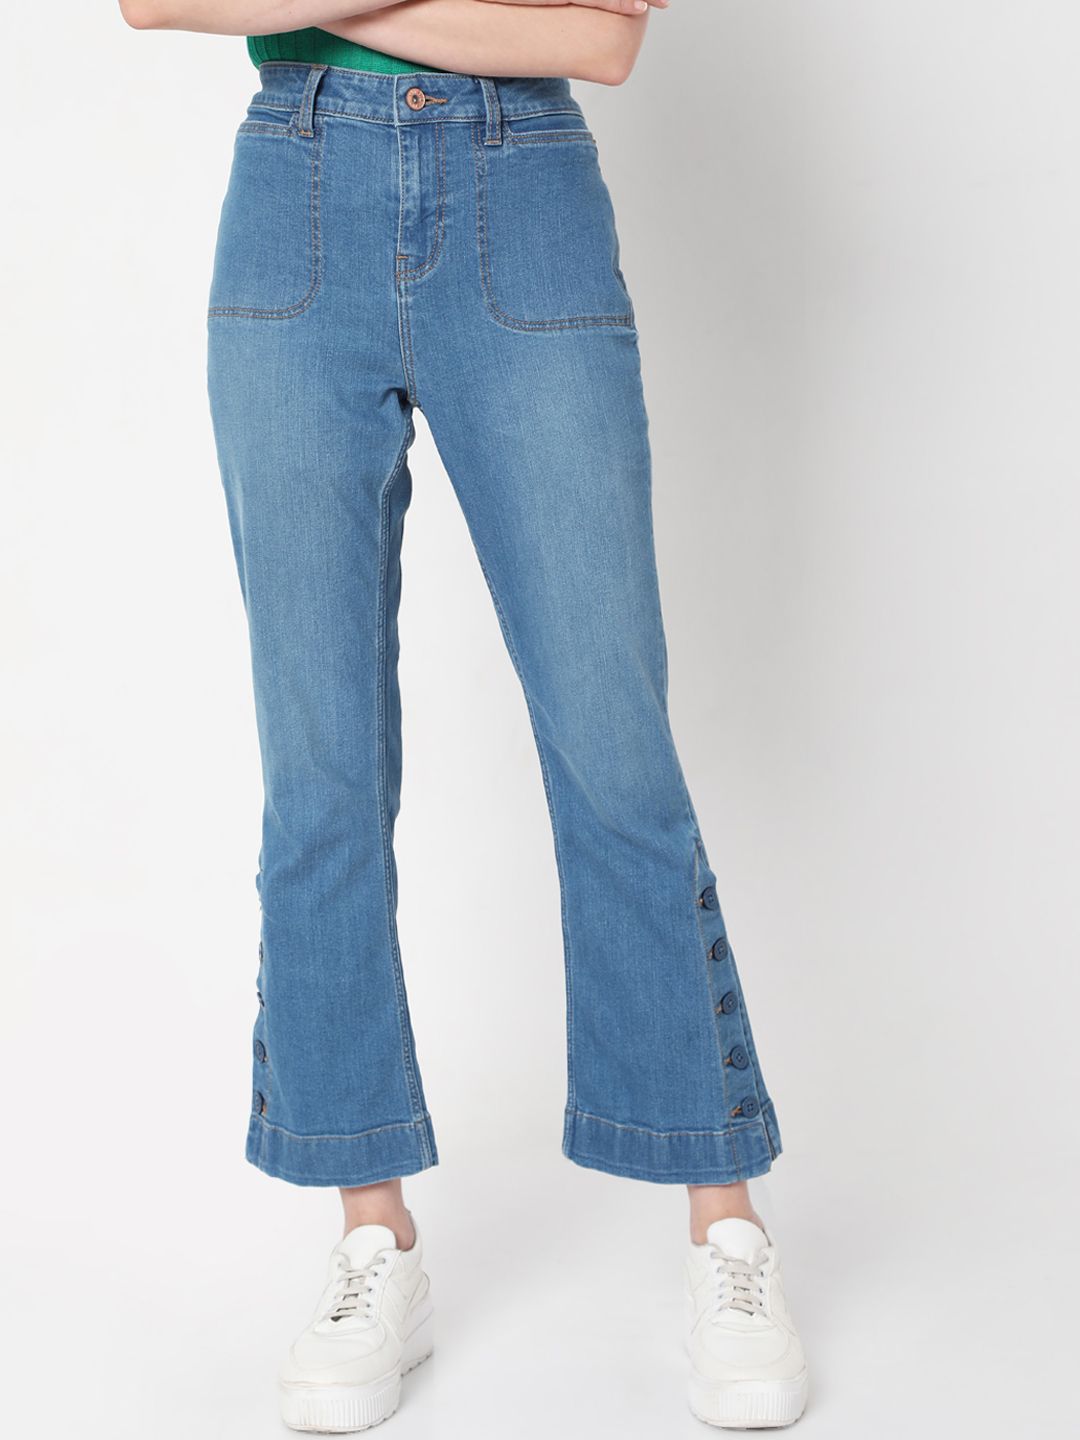 Vero Moda Women Blue Bootcut Light Fade Jeans Price in India